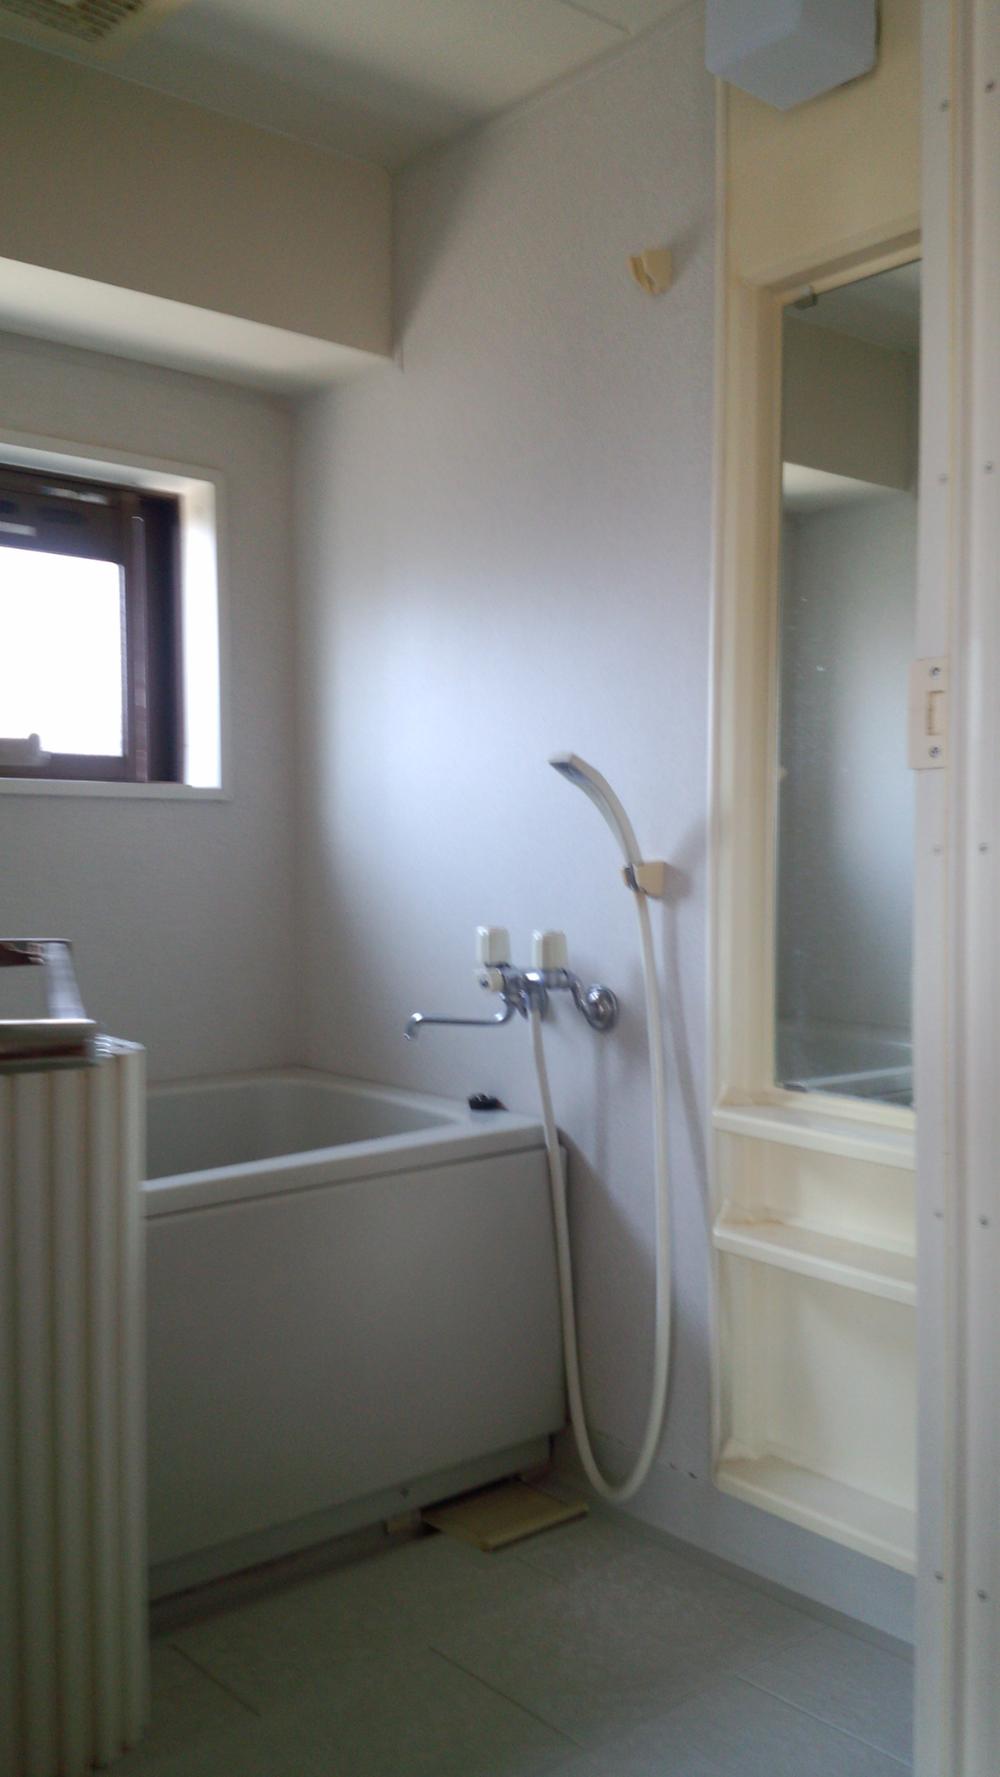 Bathroom. Room (August 2011) shooting